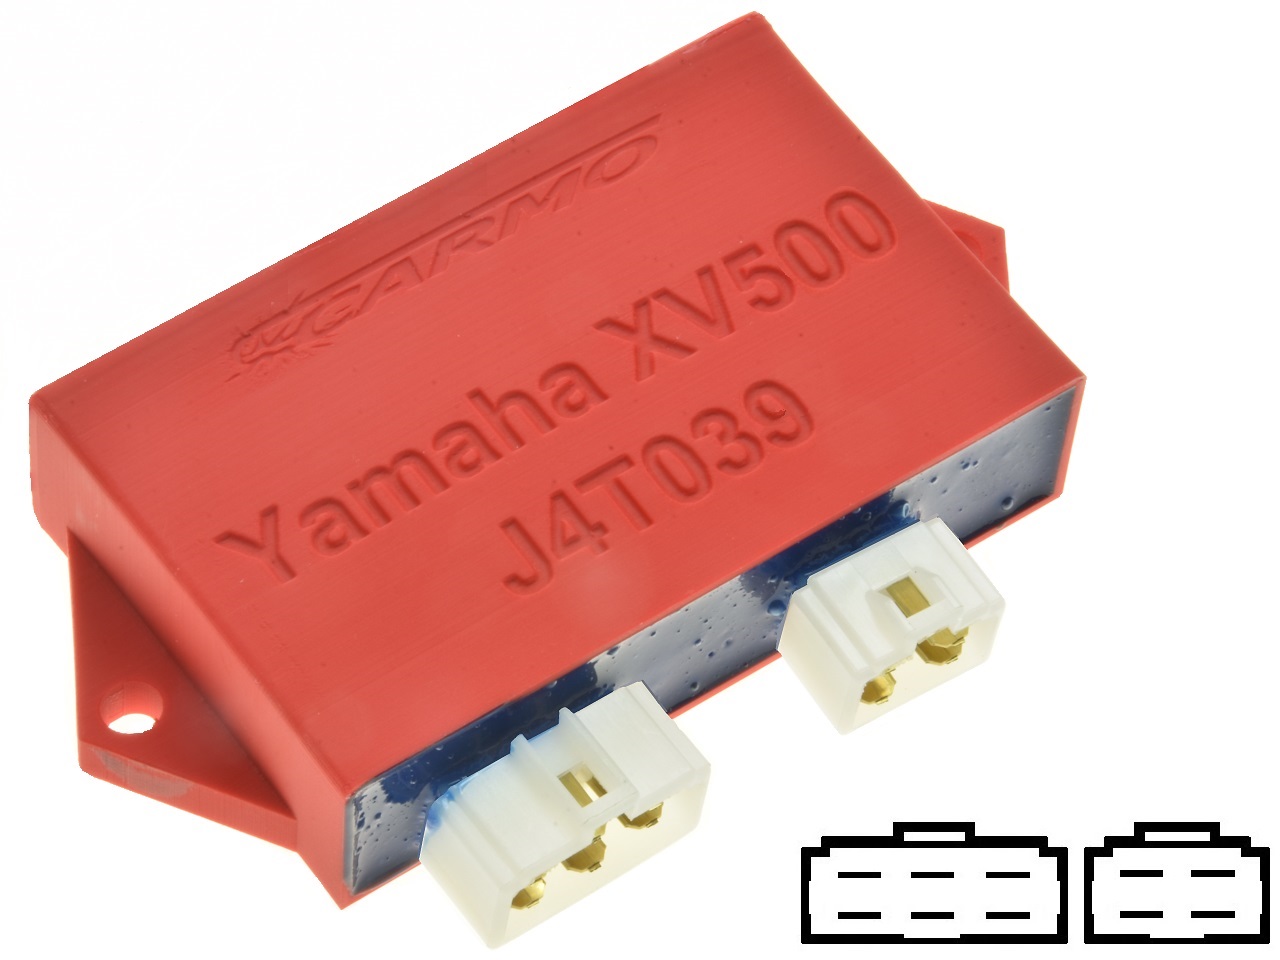 Yamaha XV500 Virago igniter ignition module CDI TCI Box (J4T039, 4FT-00) - Click Image to Close